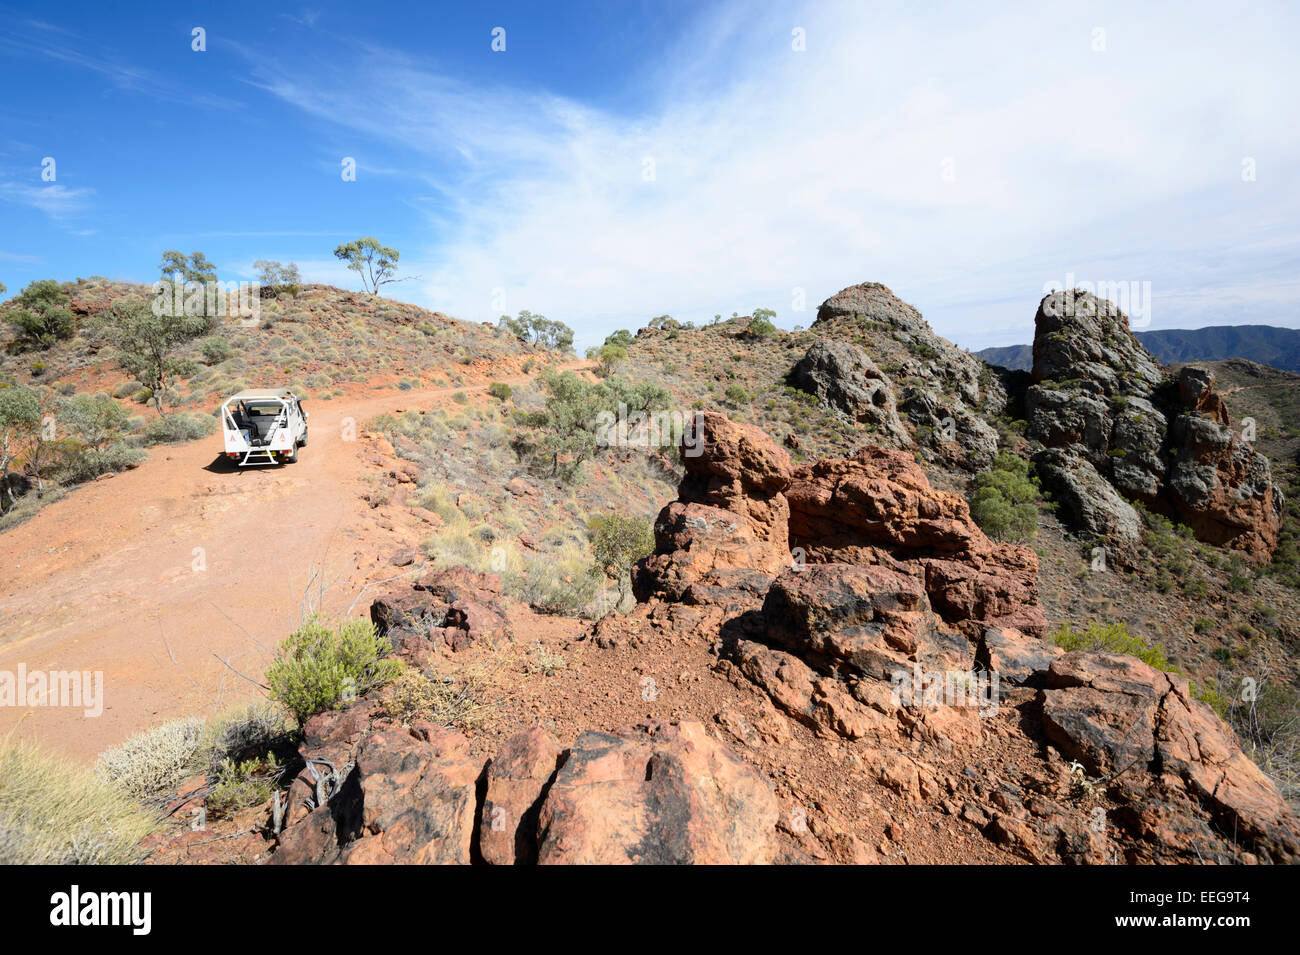 Arkaroola Resort and Wilderness Sanctuary, Flinders Ranges, South Australia Stock Photo